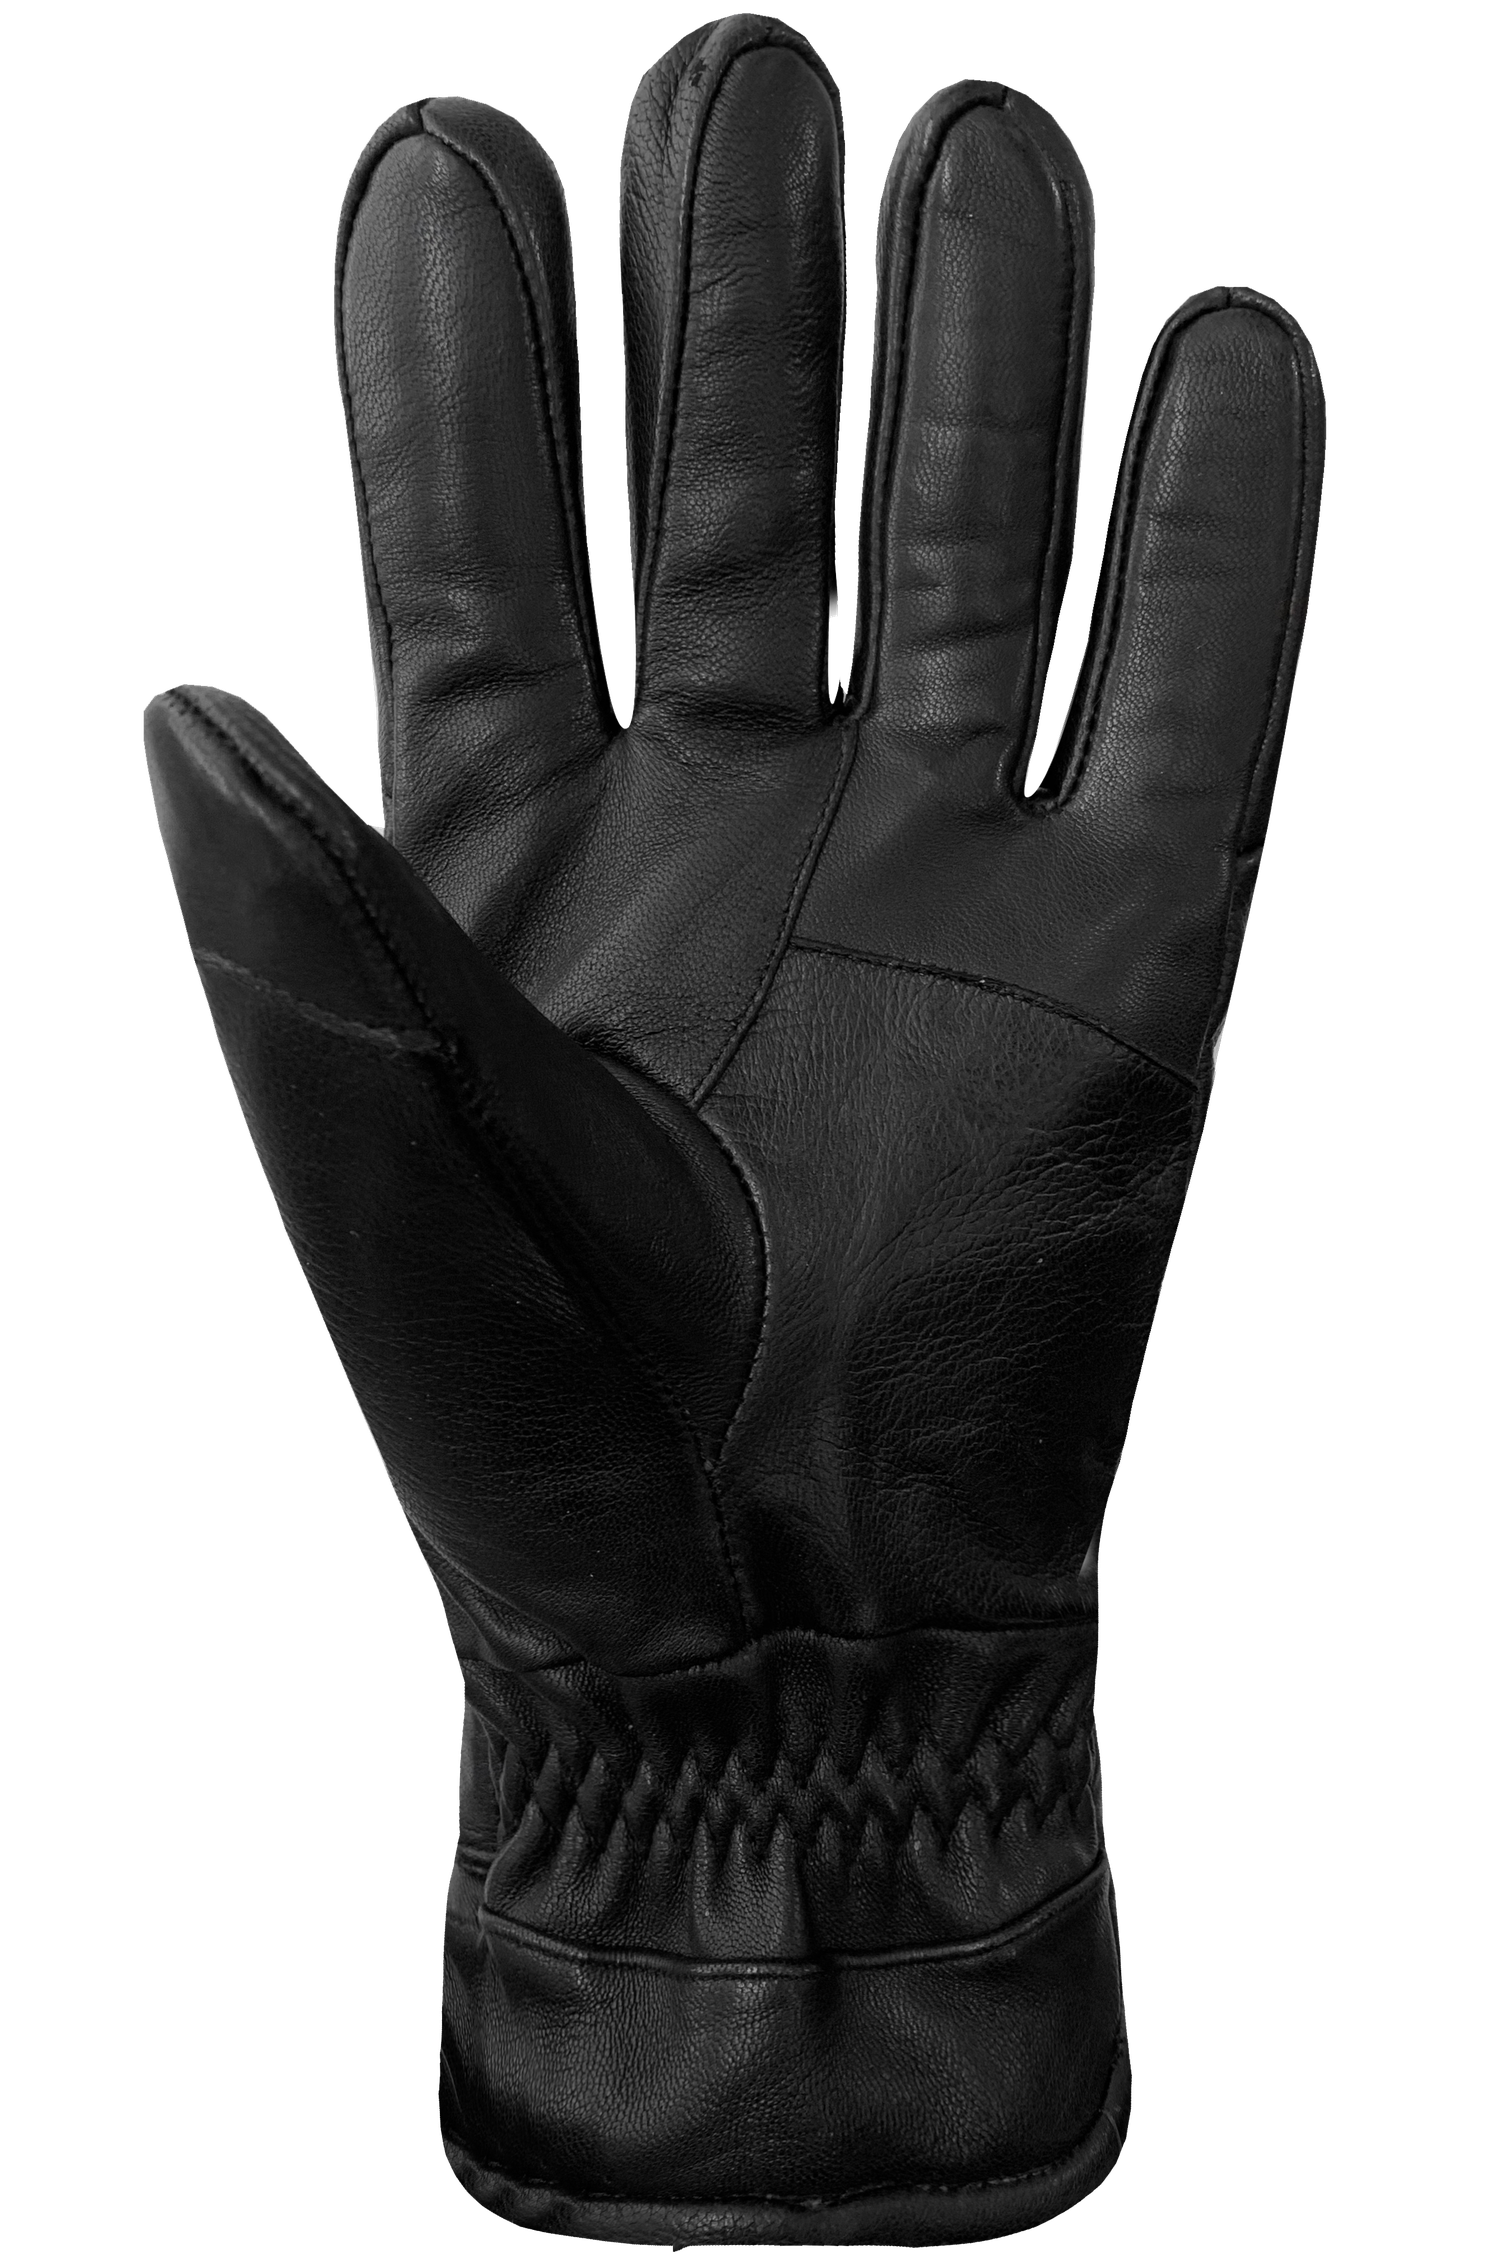 Brody Gloves - Men